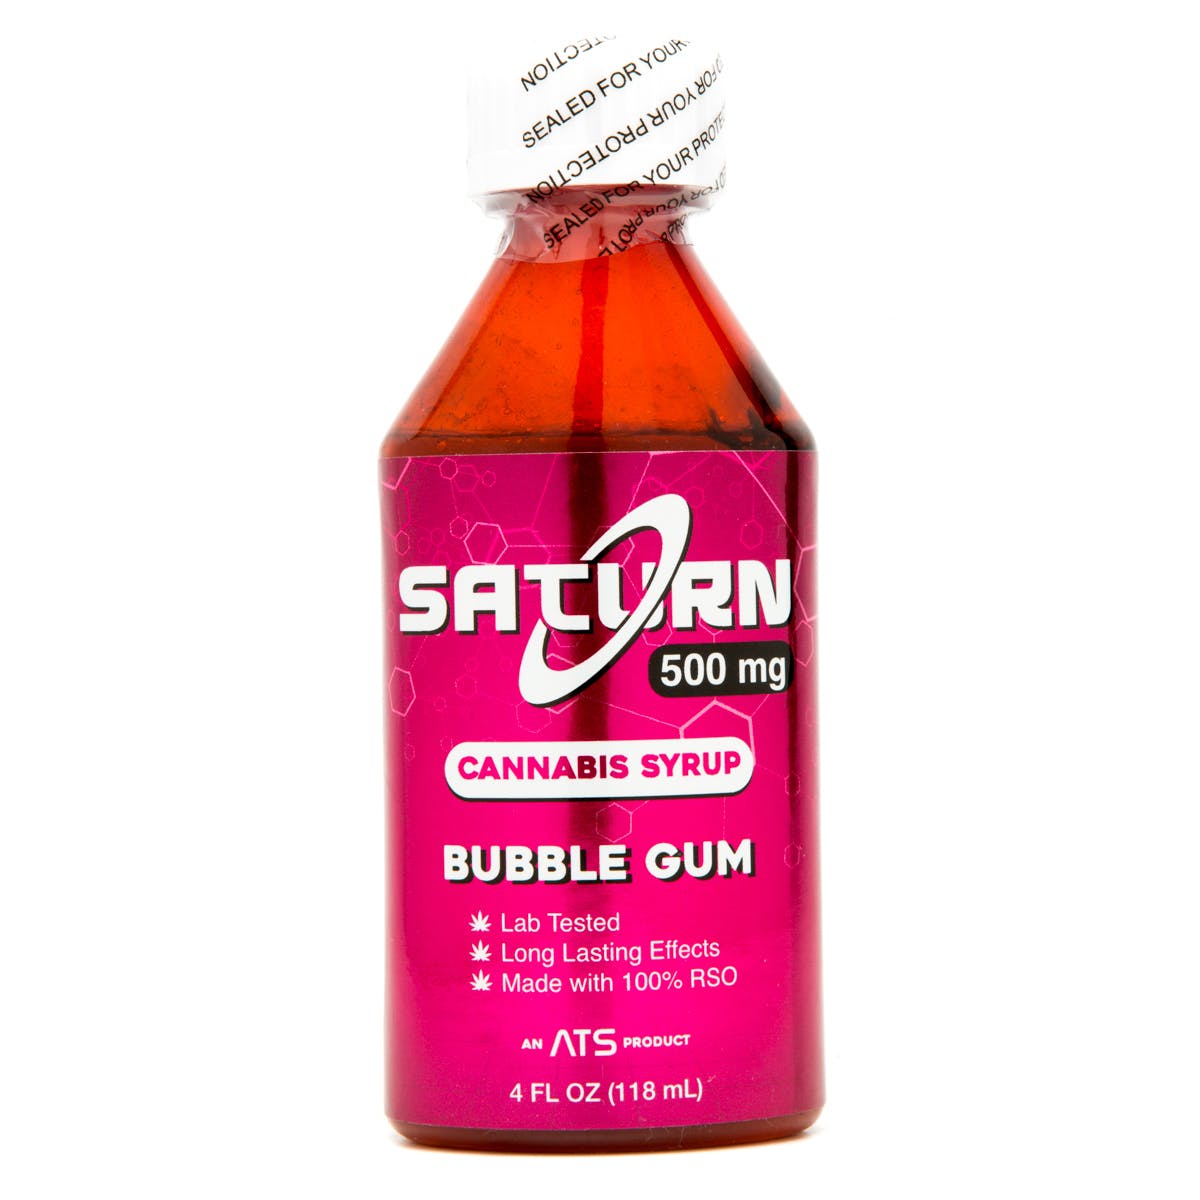 Bubble Gum Cannabis Syrup, 500mg